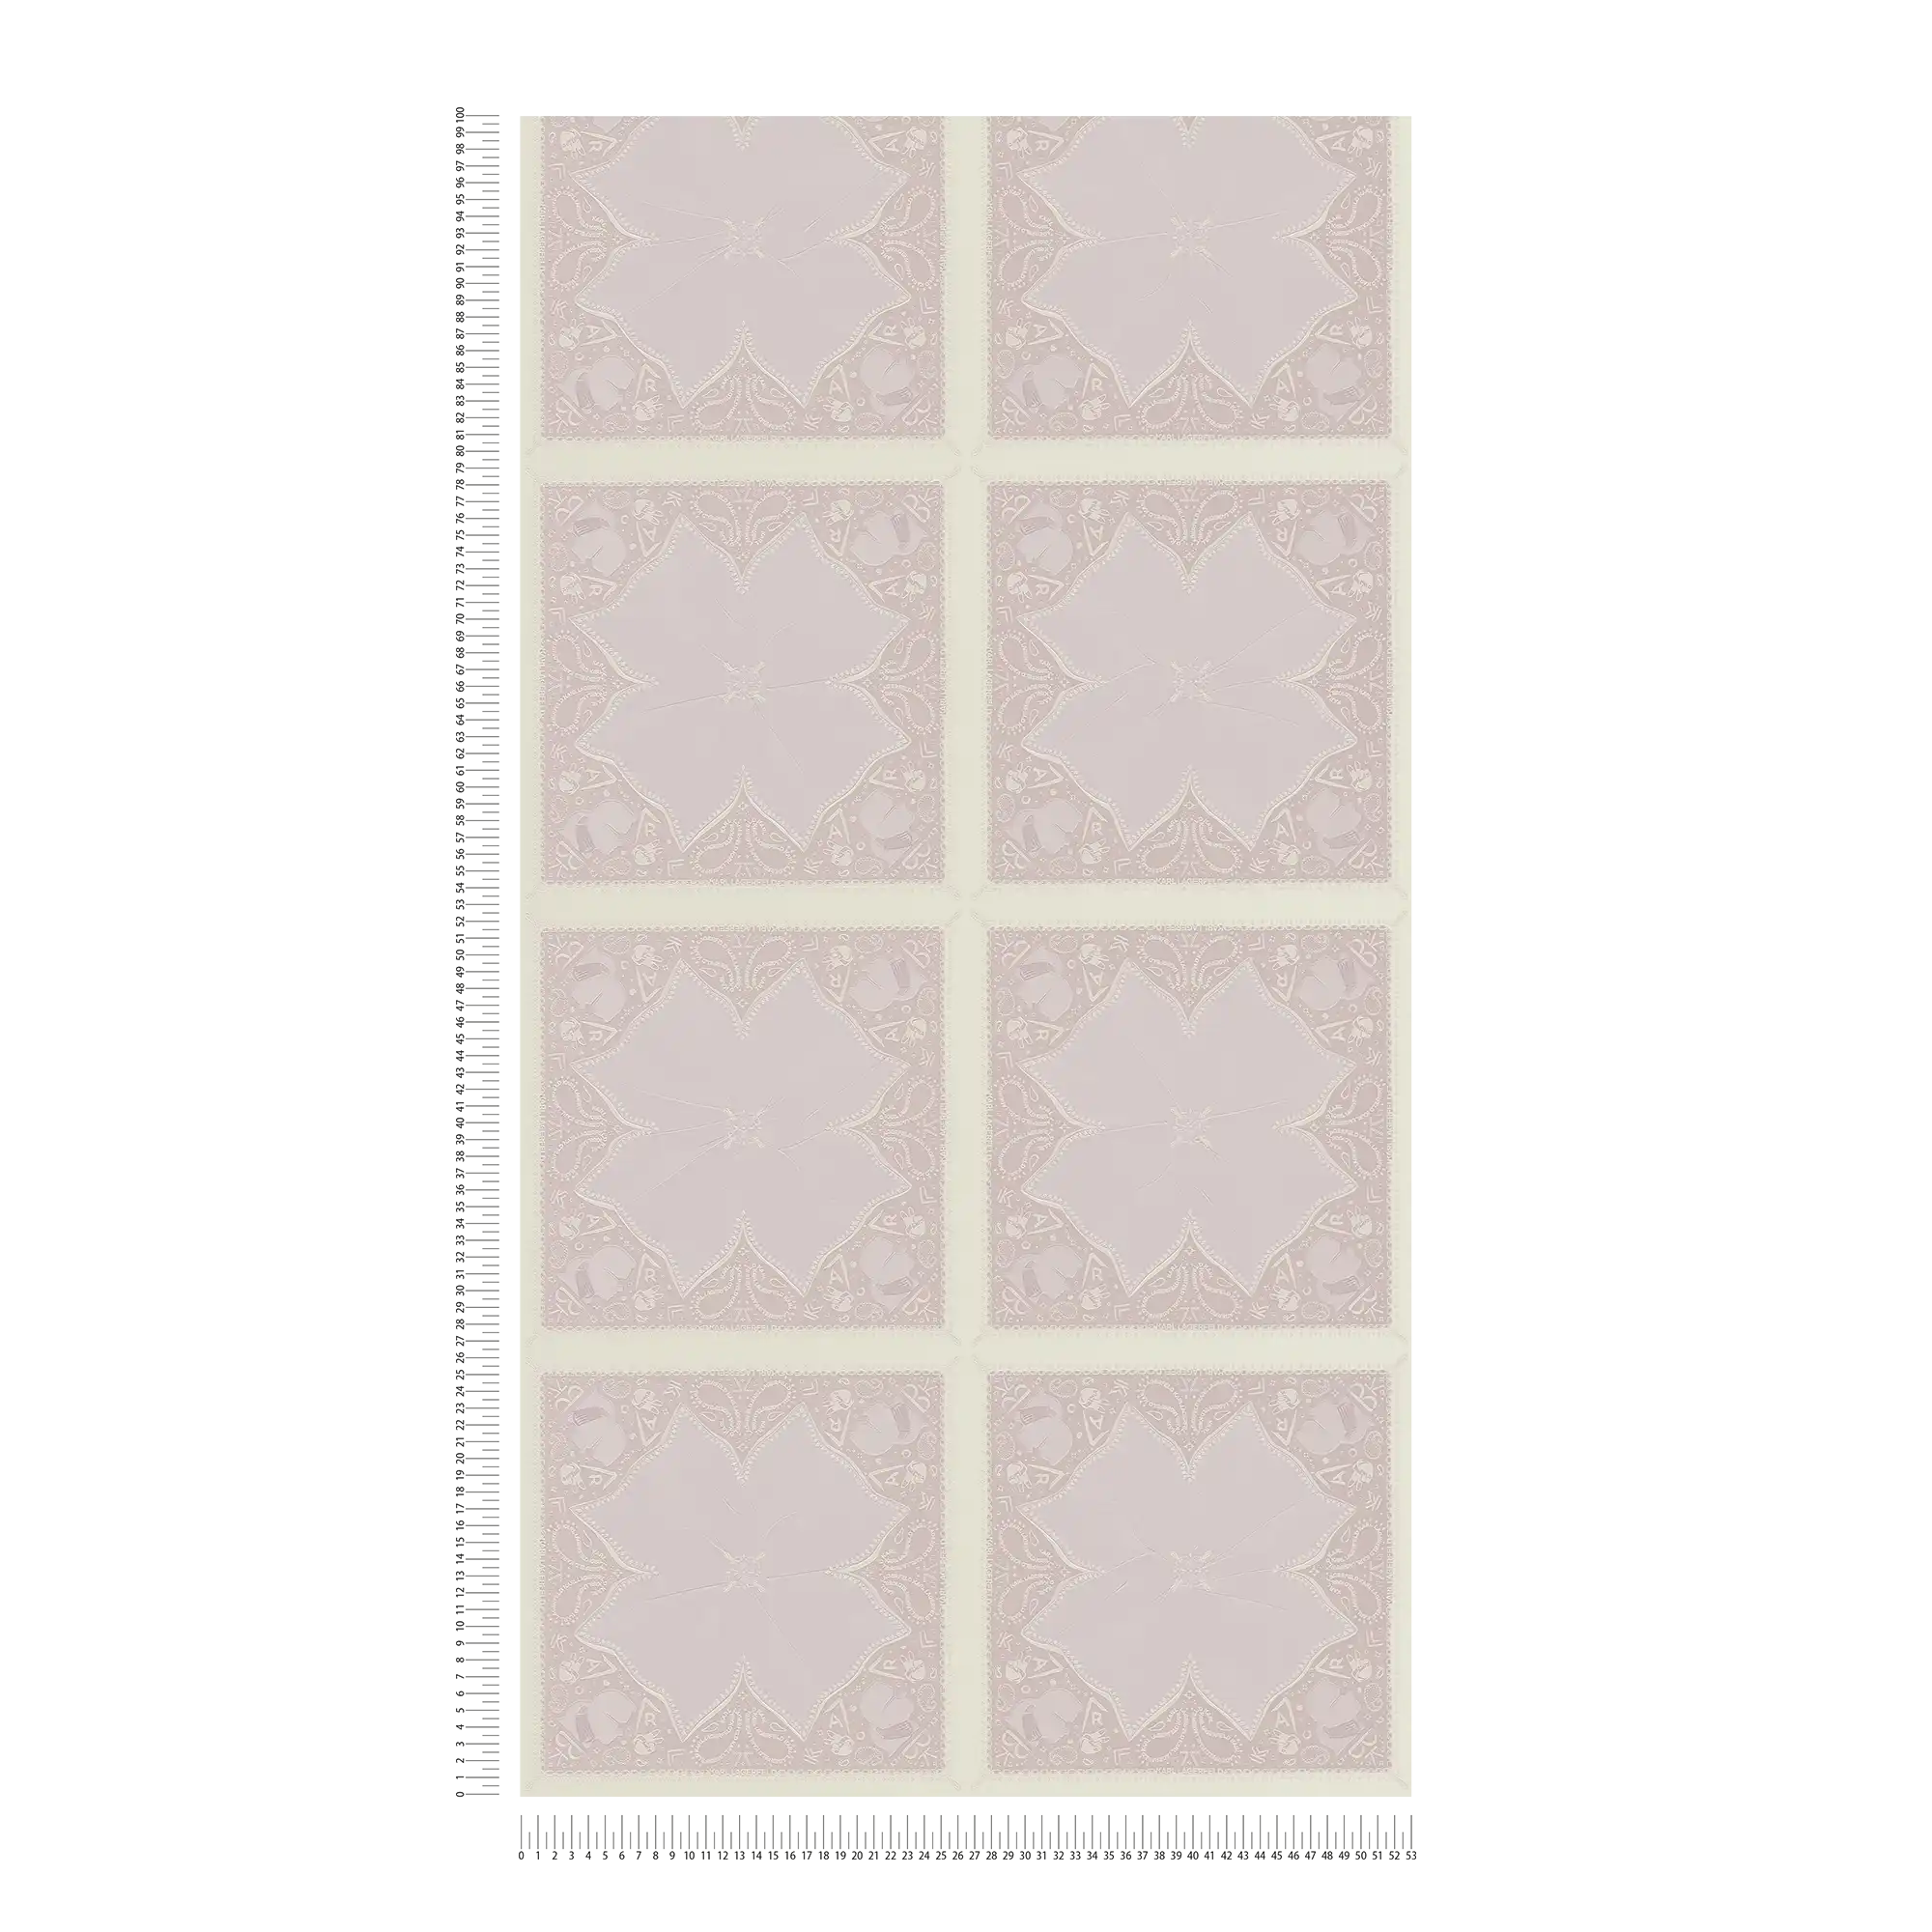             Papier peint Karl LAGERFELD motif cravate - rose
        